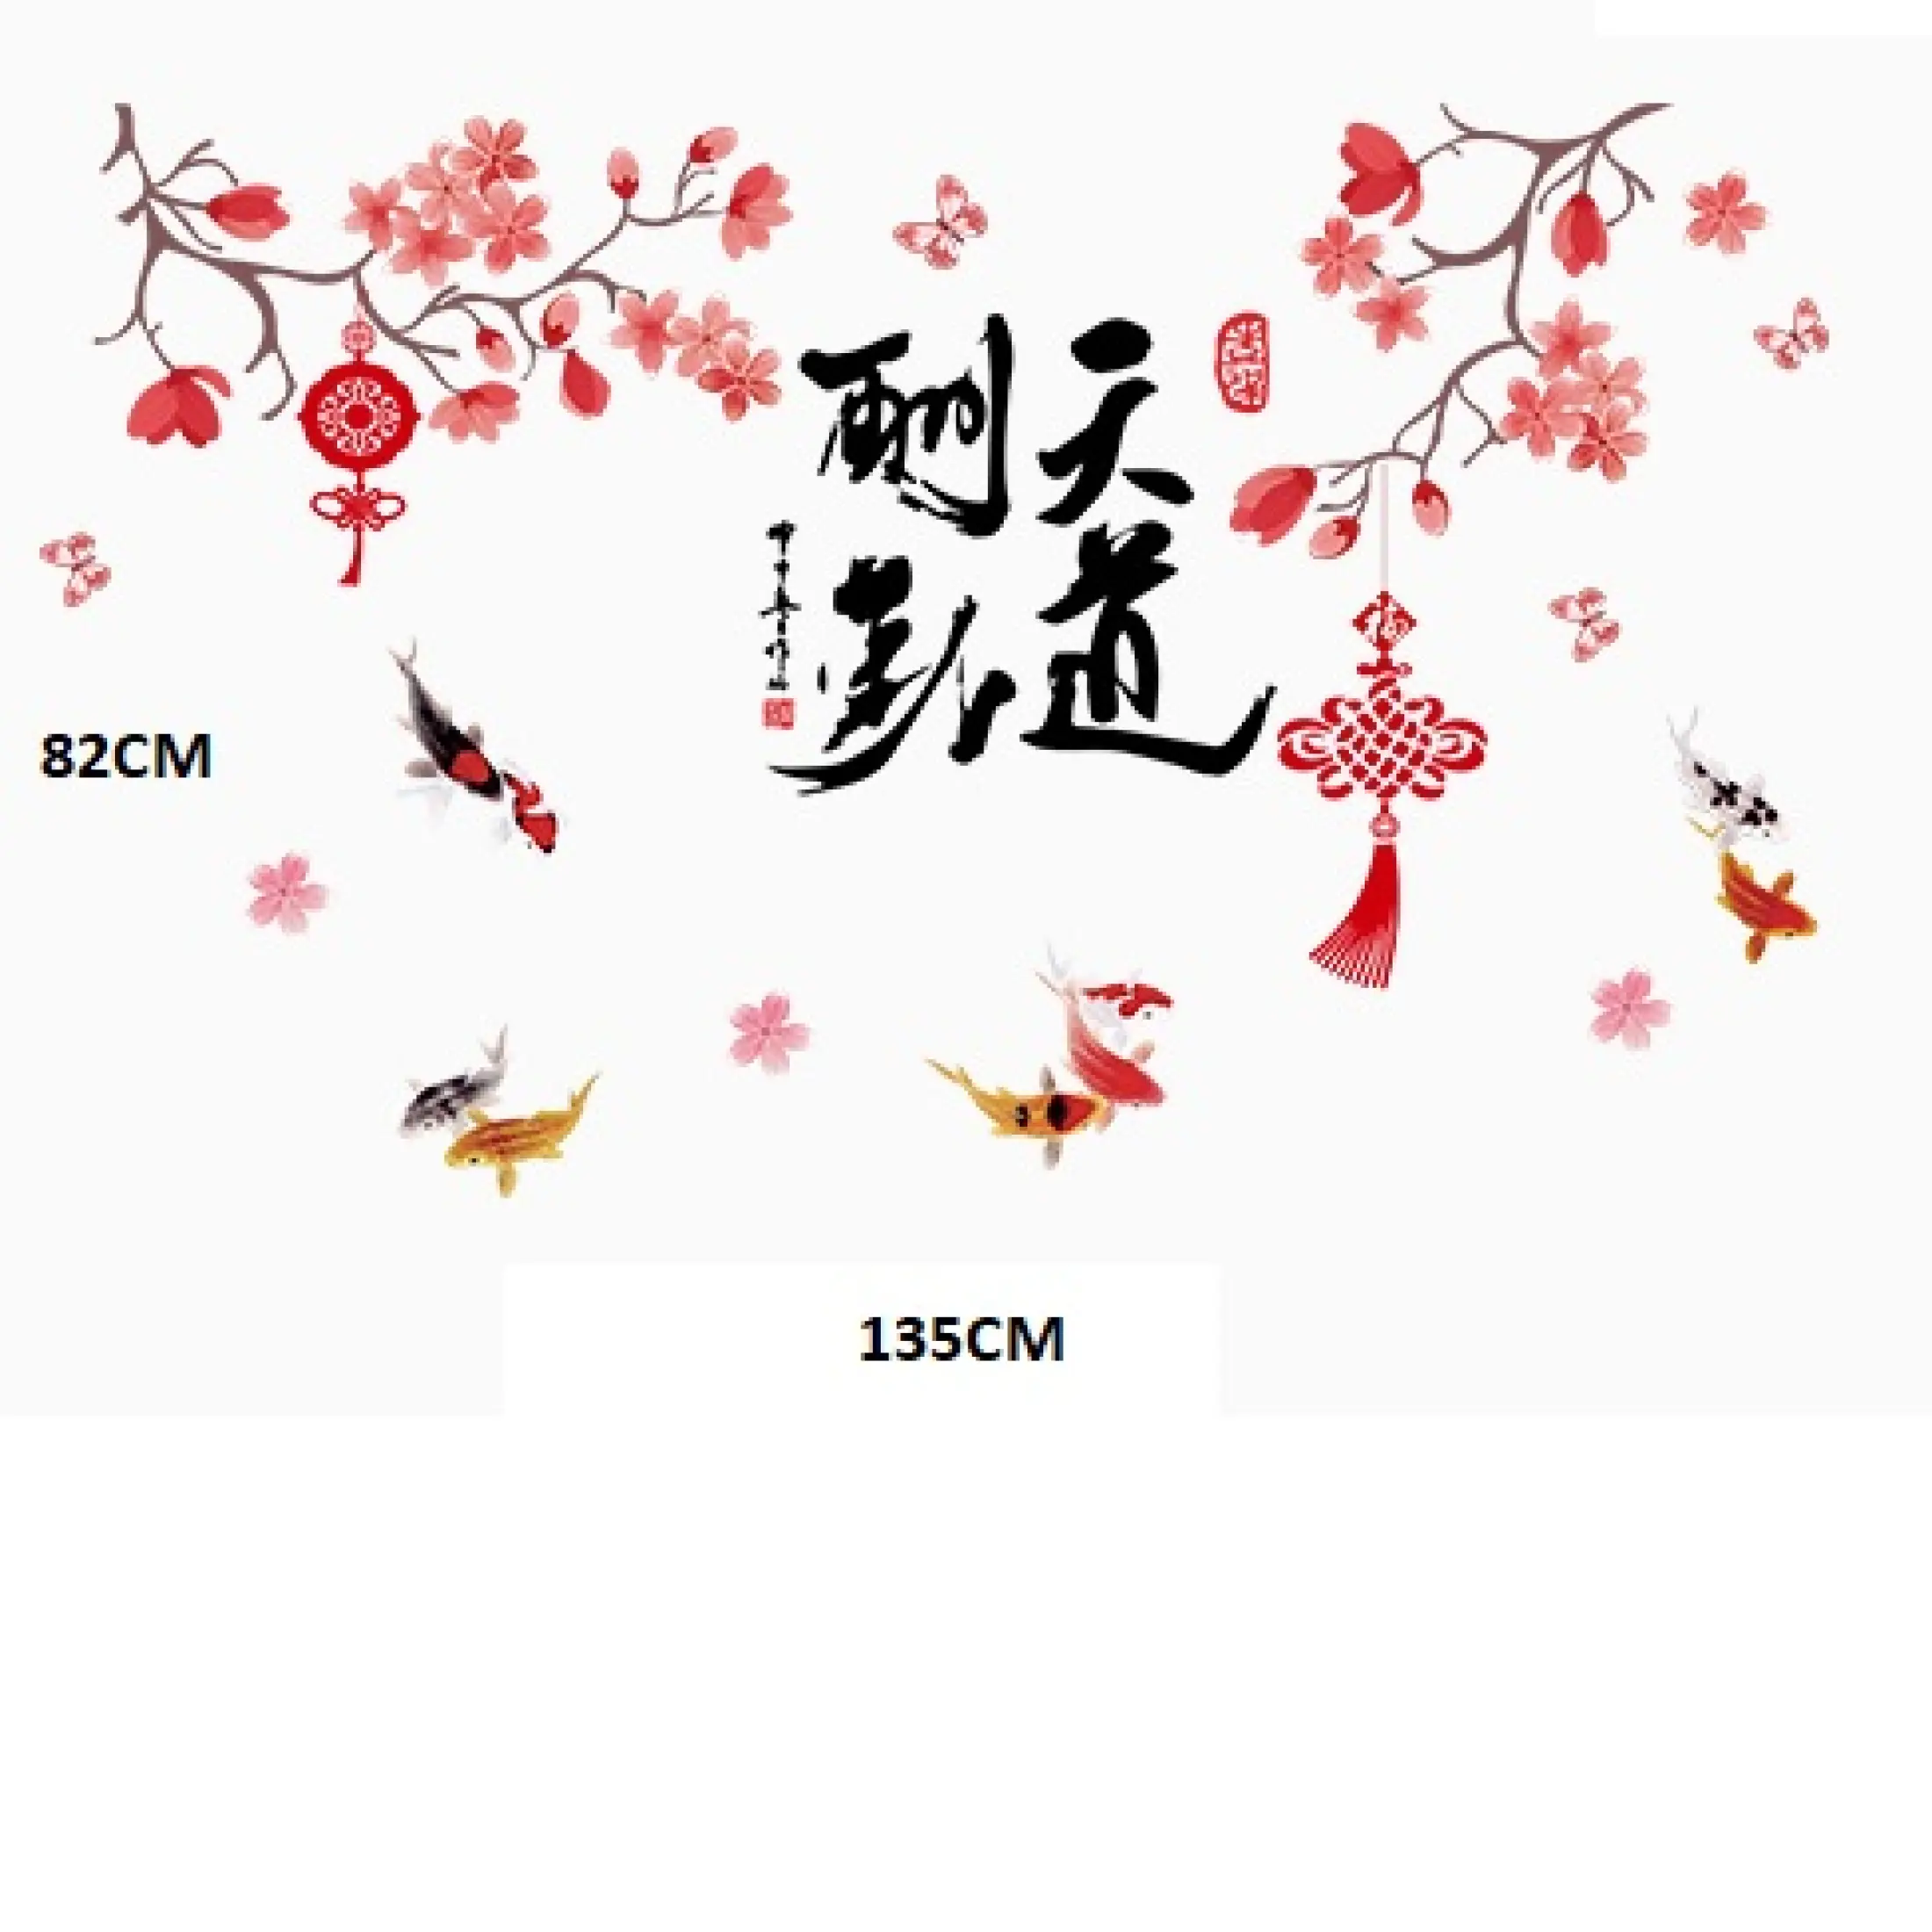 Wallpaper Tulisan Mandarin 3d Image Num 22